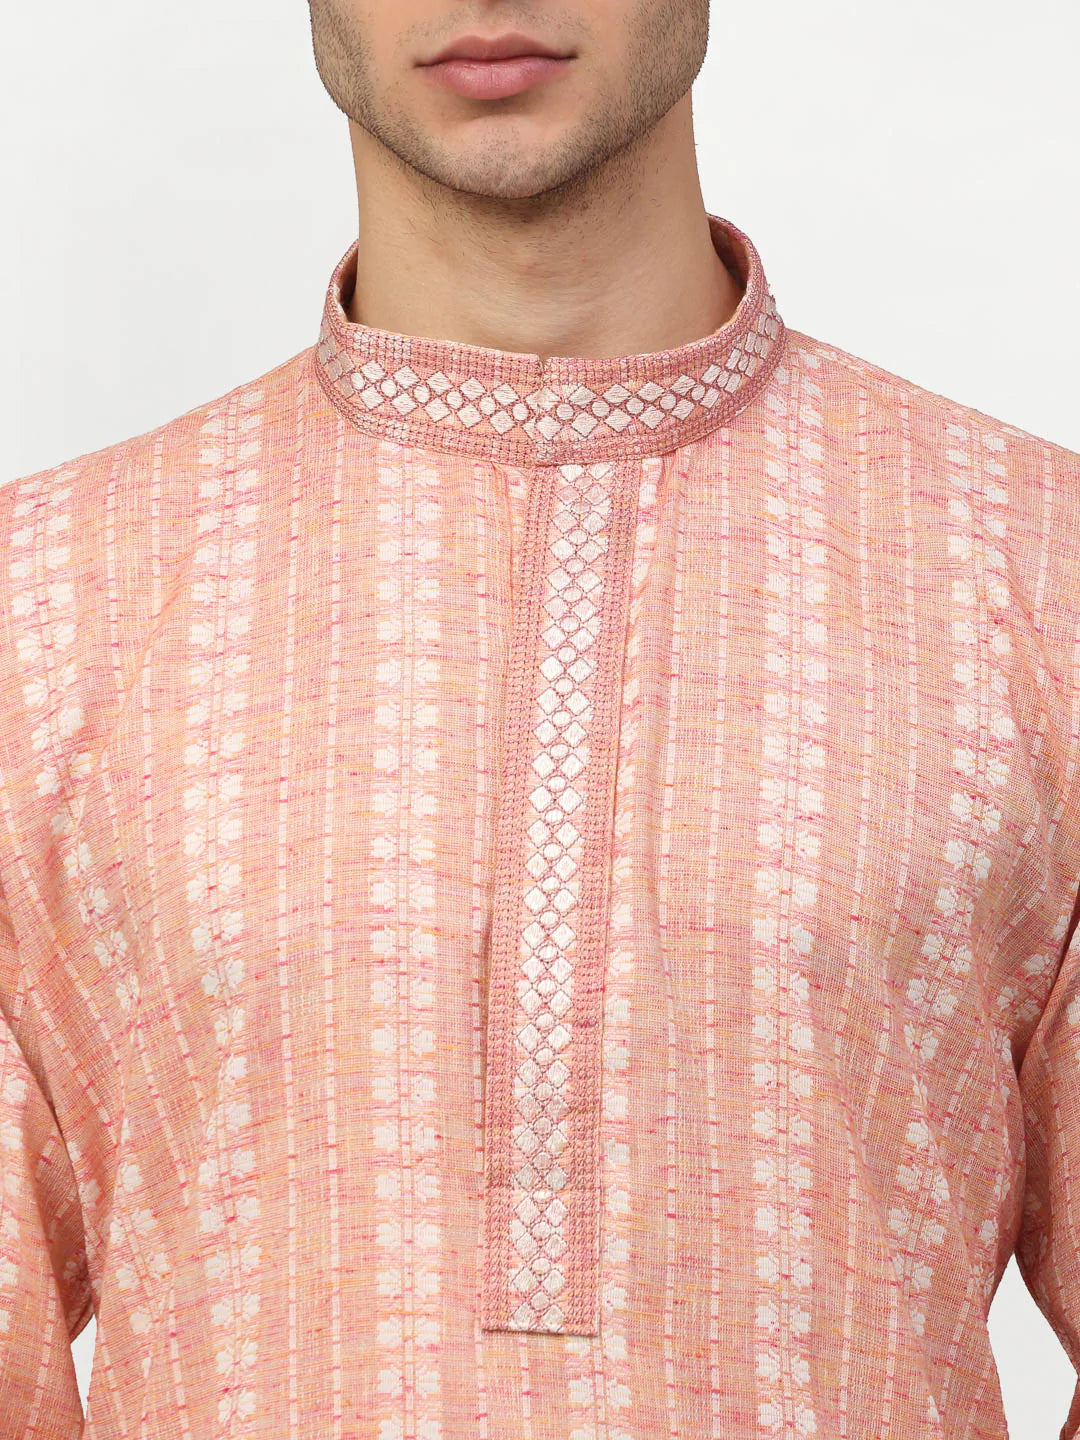 Men's Pink Cotton Woven Kurta Set